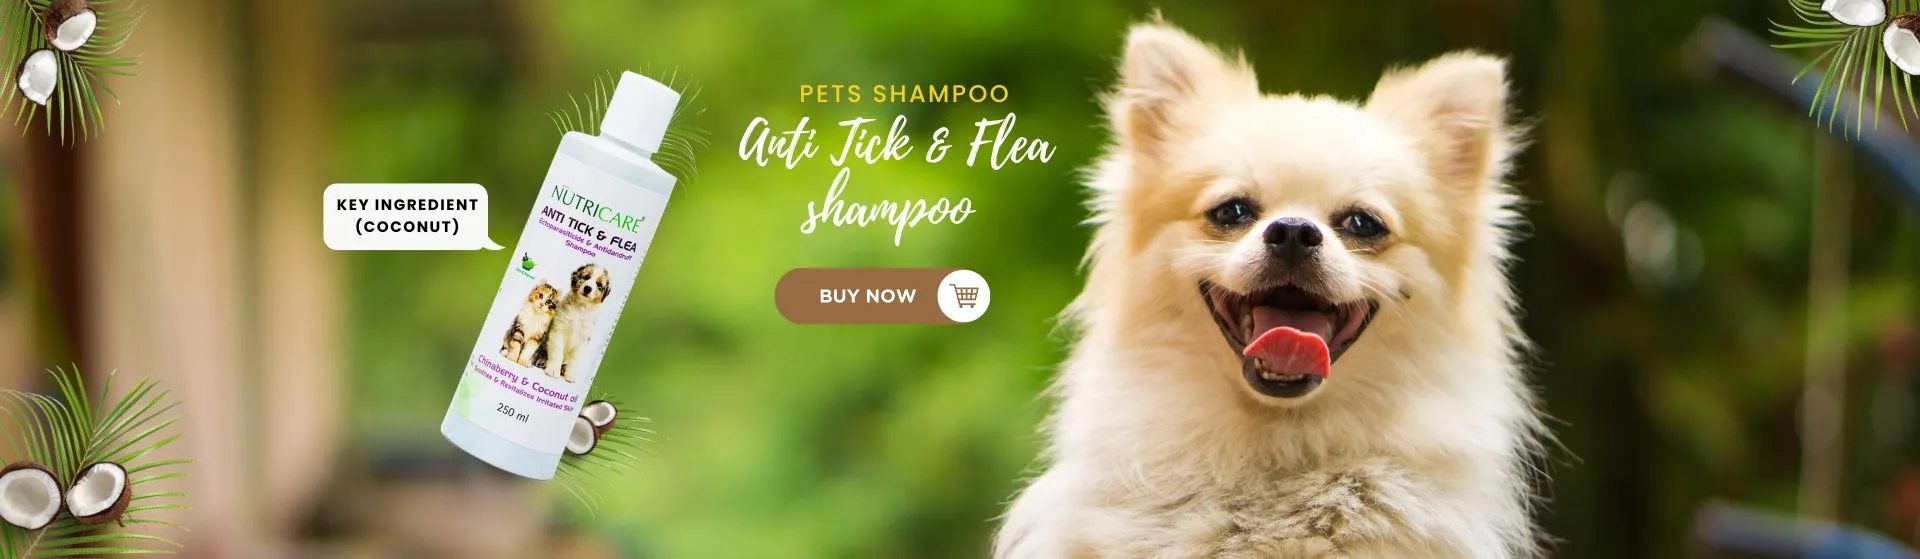 Anti Tick and Flea Shampoo